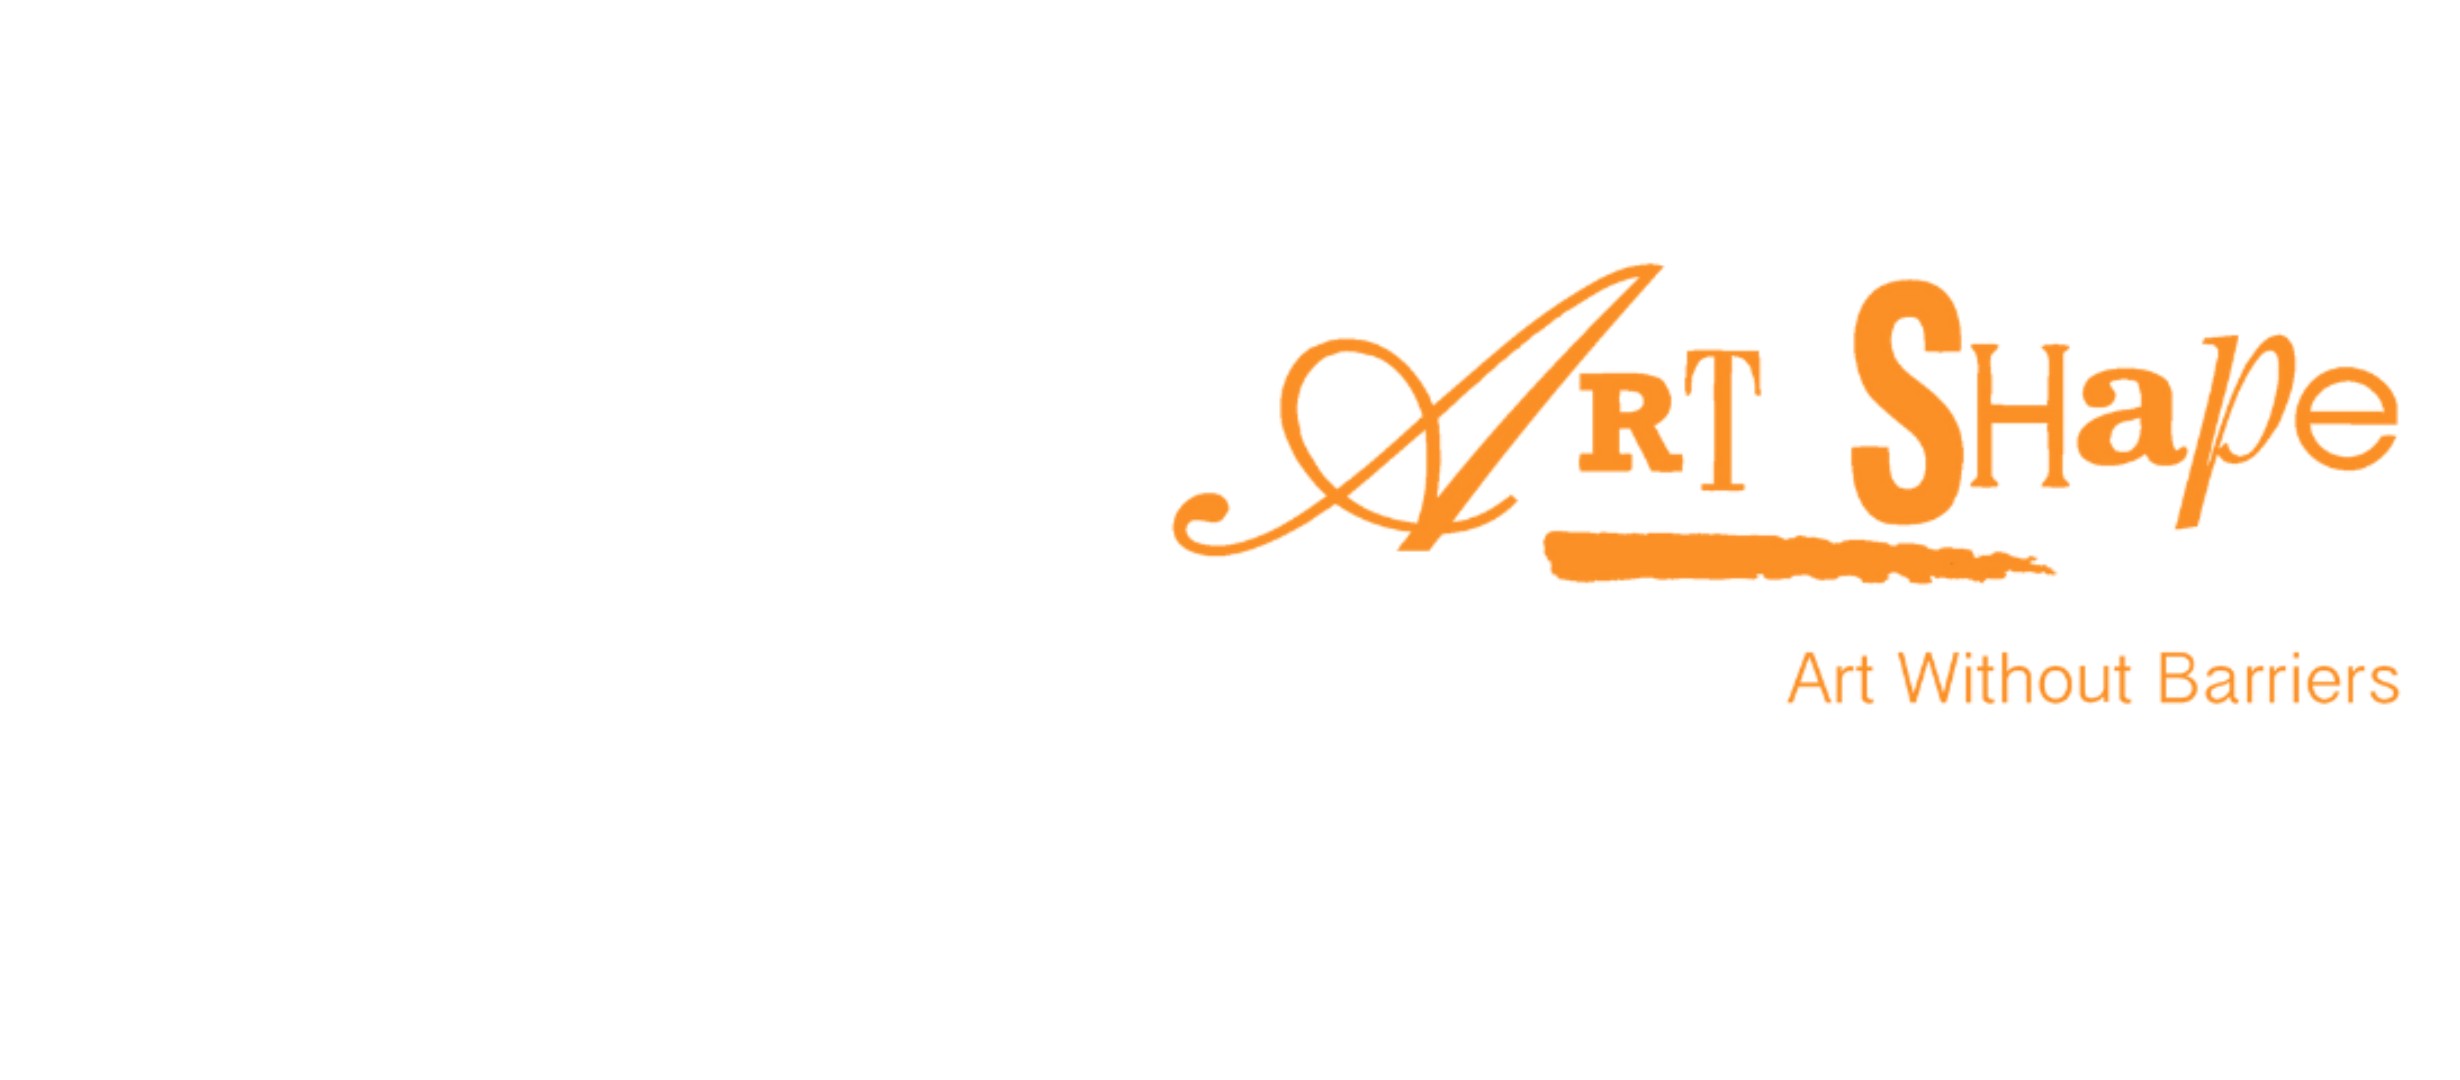 Art Shape logo. Art without barriers